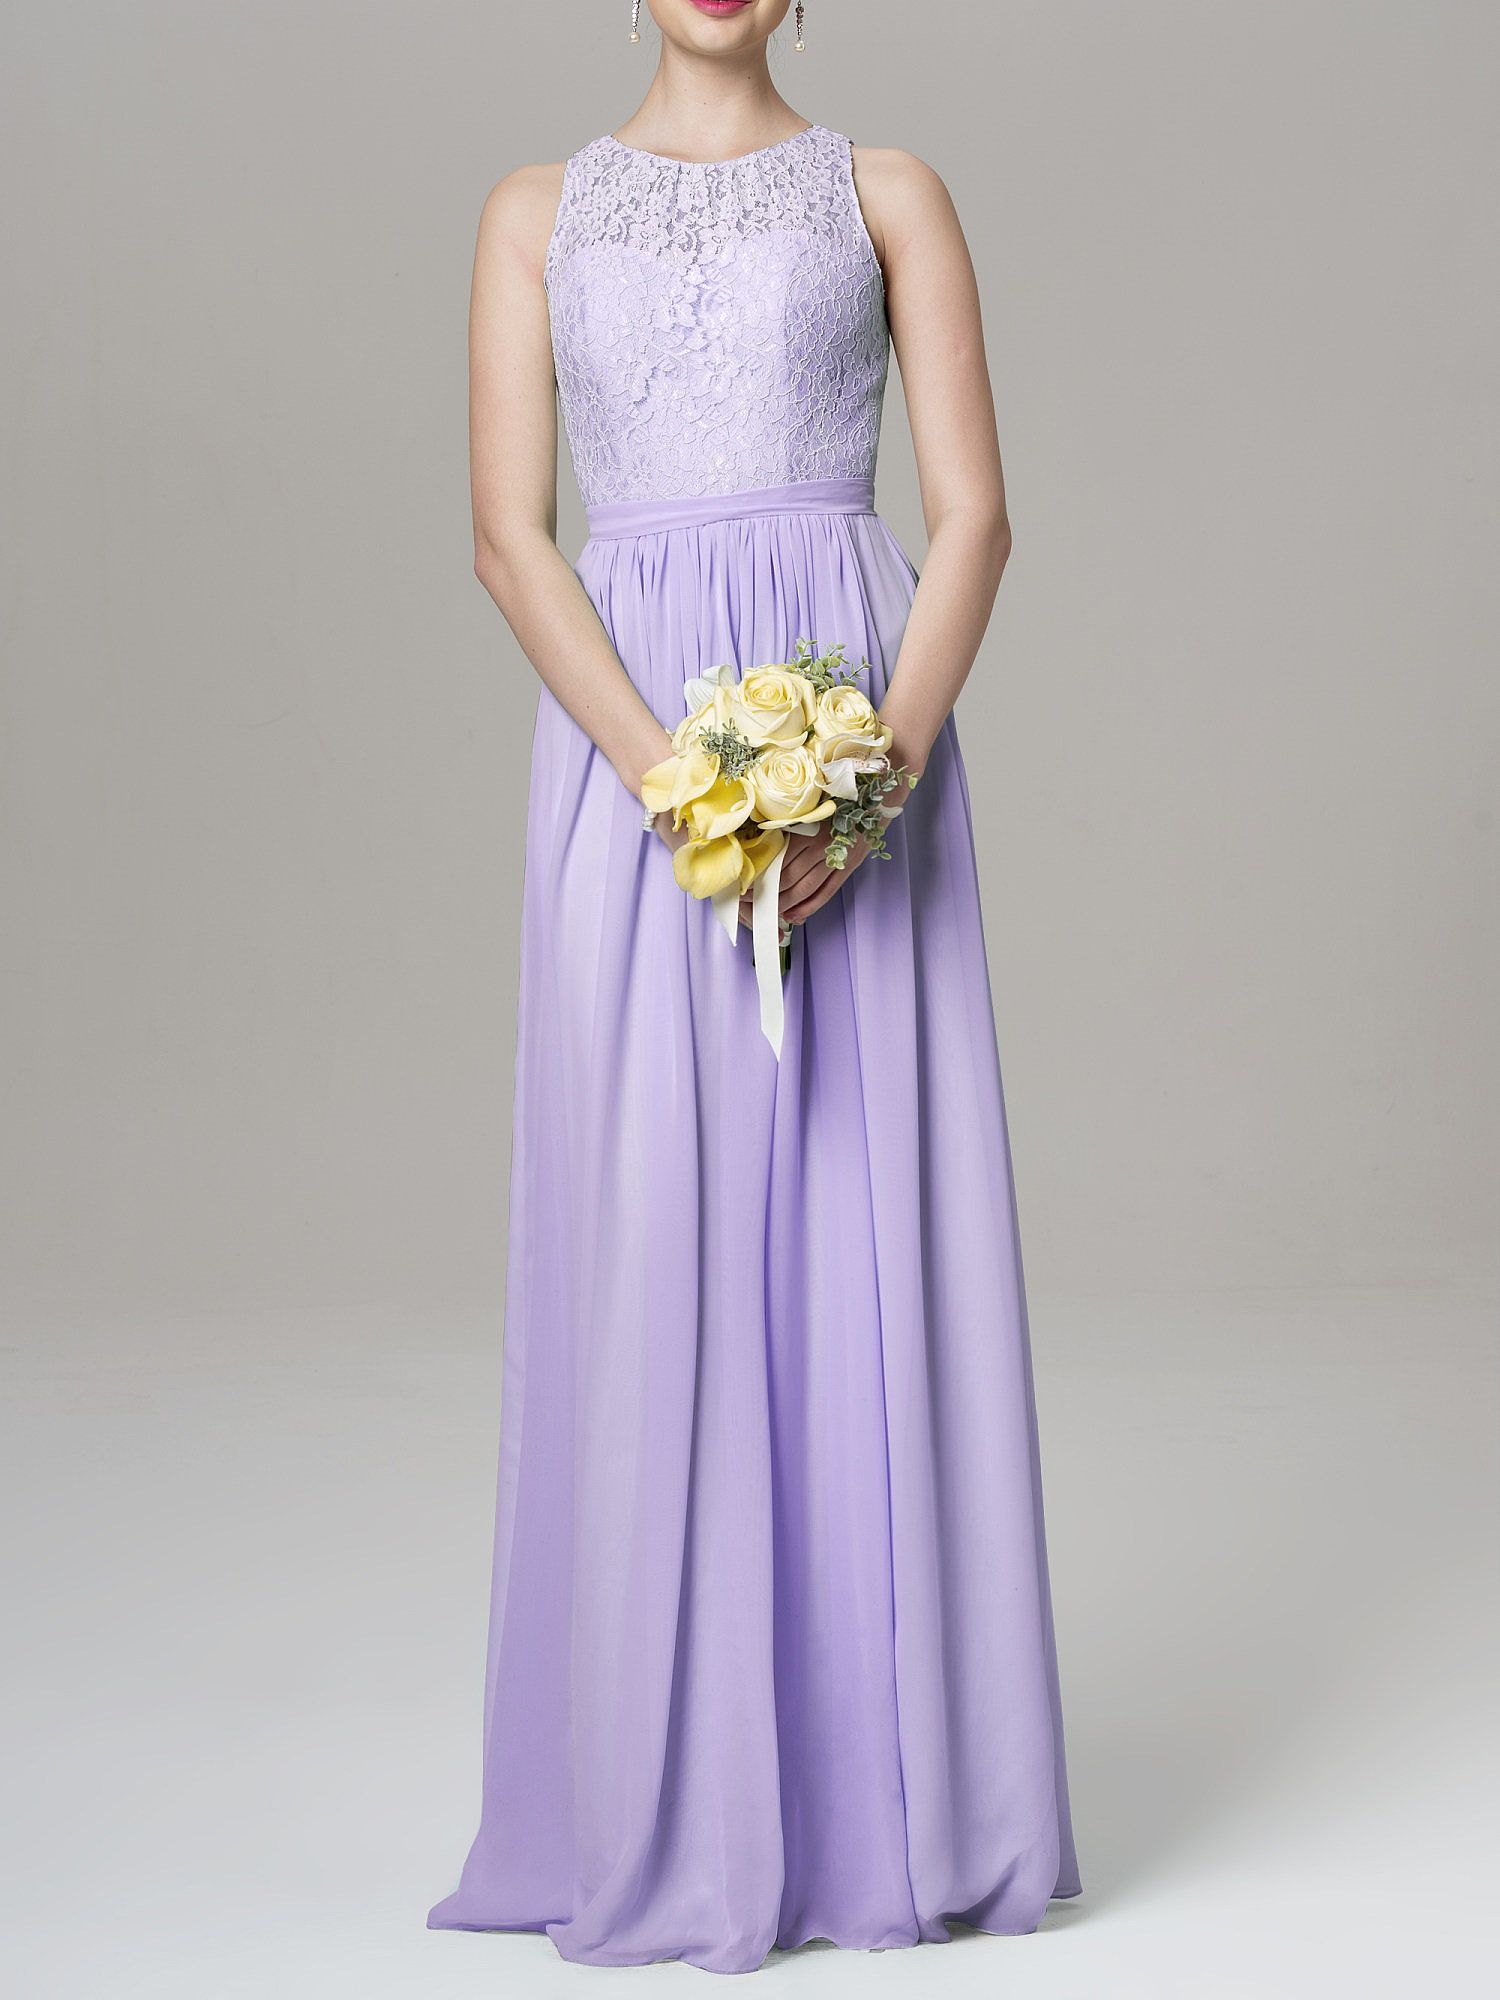 Allanah lace and chiffon bridesmaid dress in Lavender